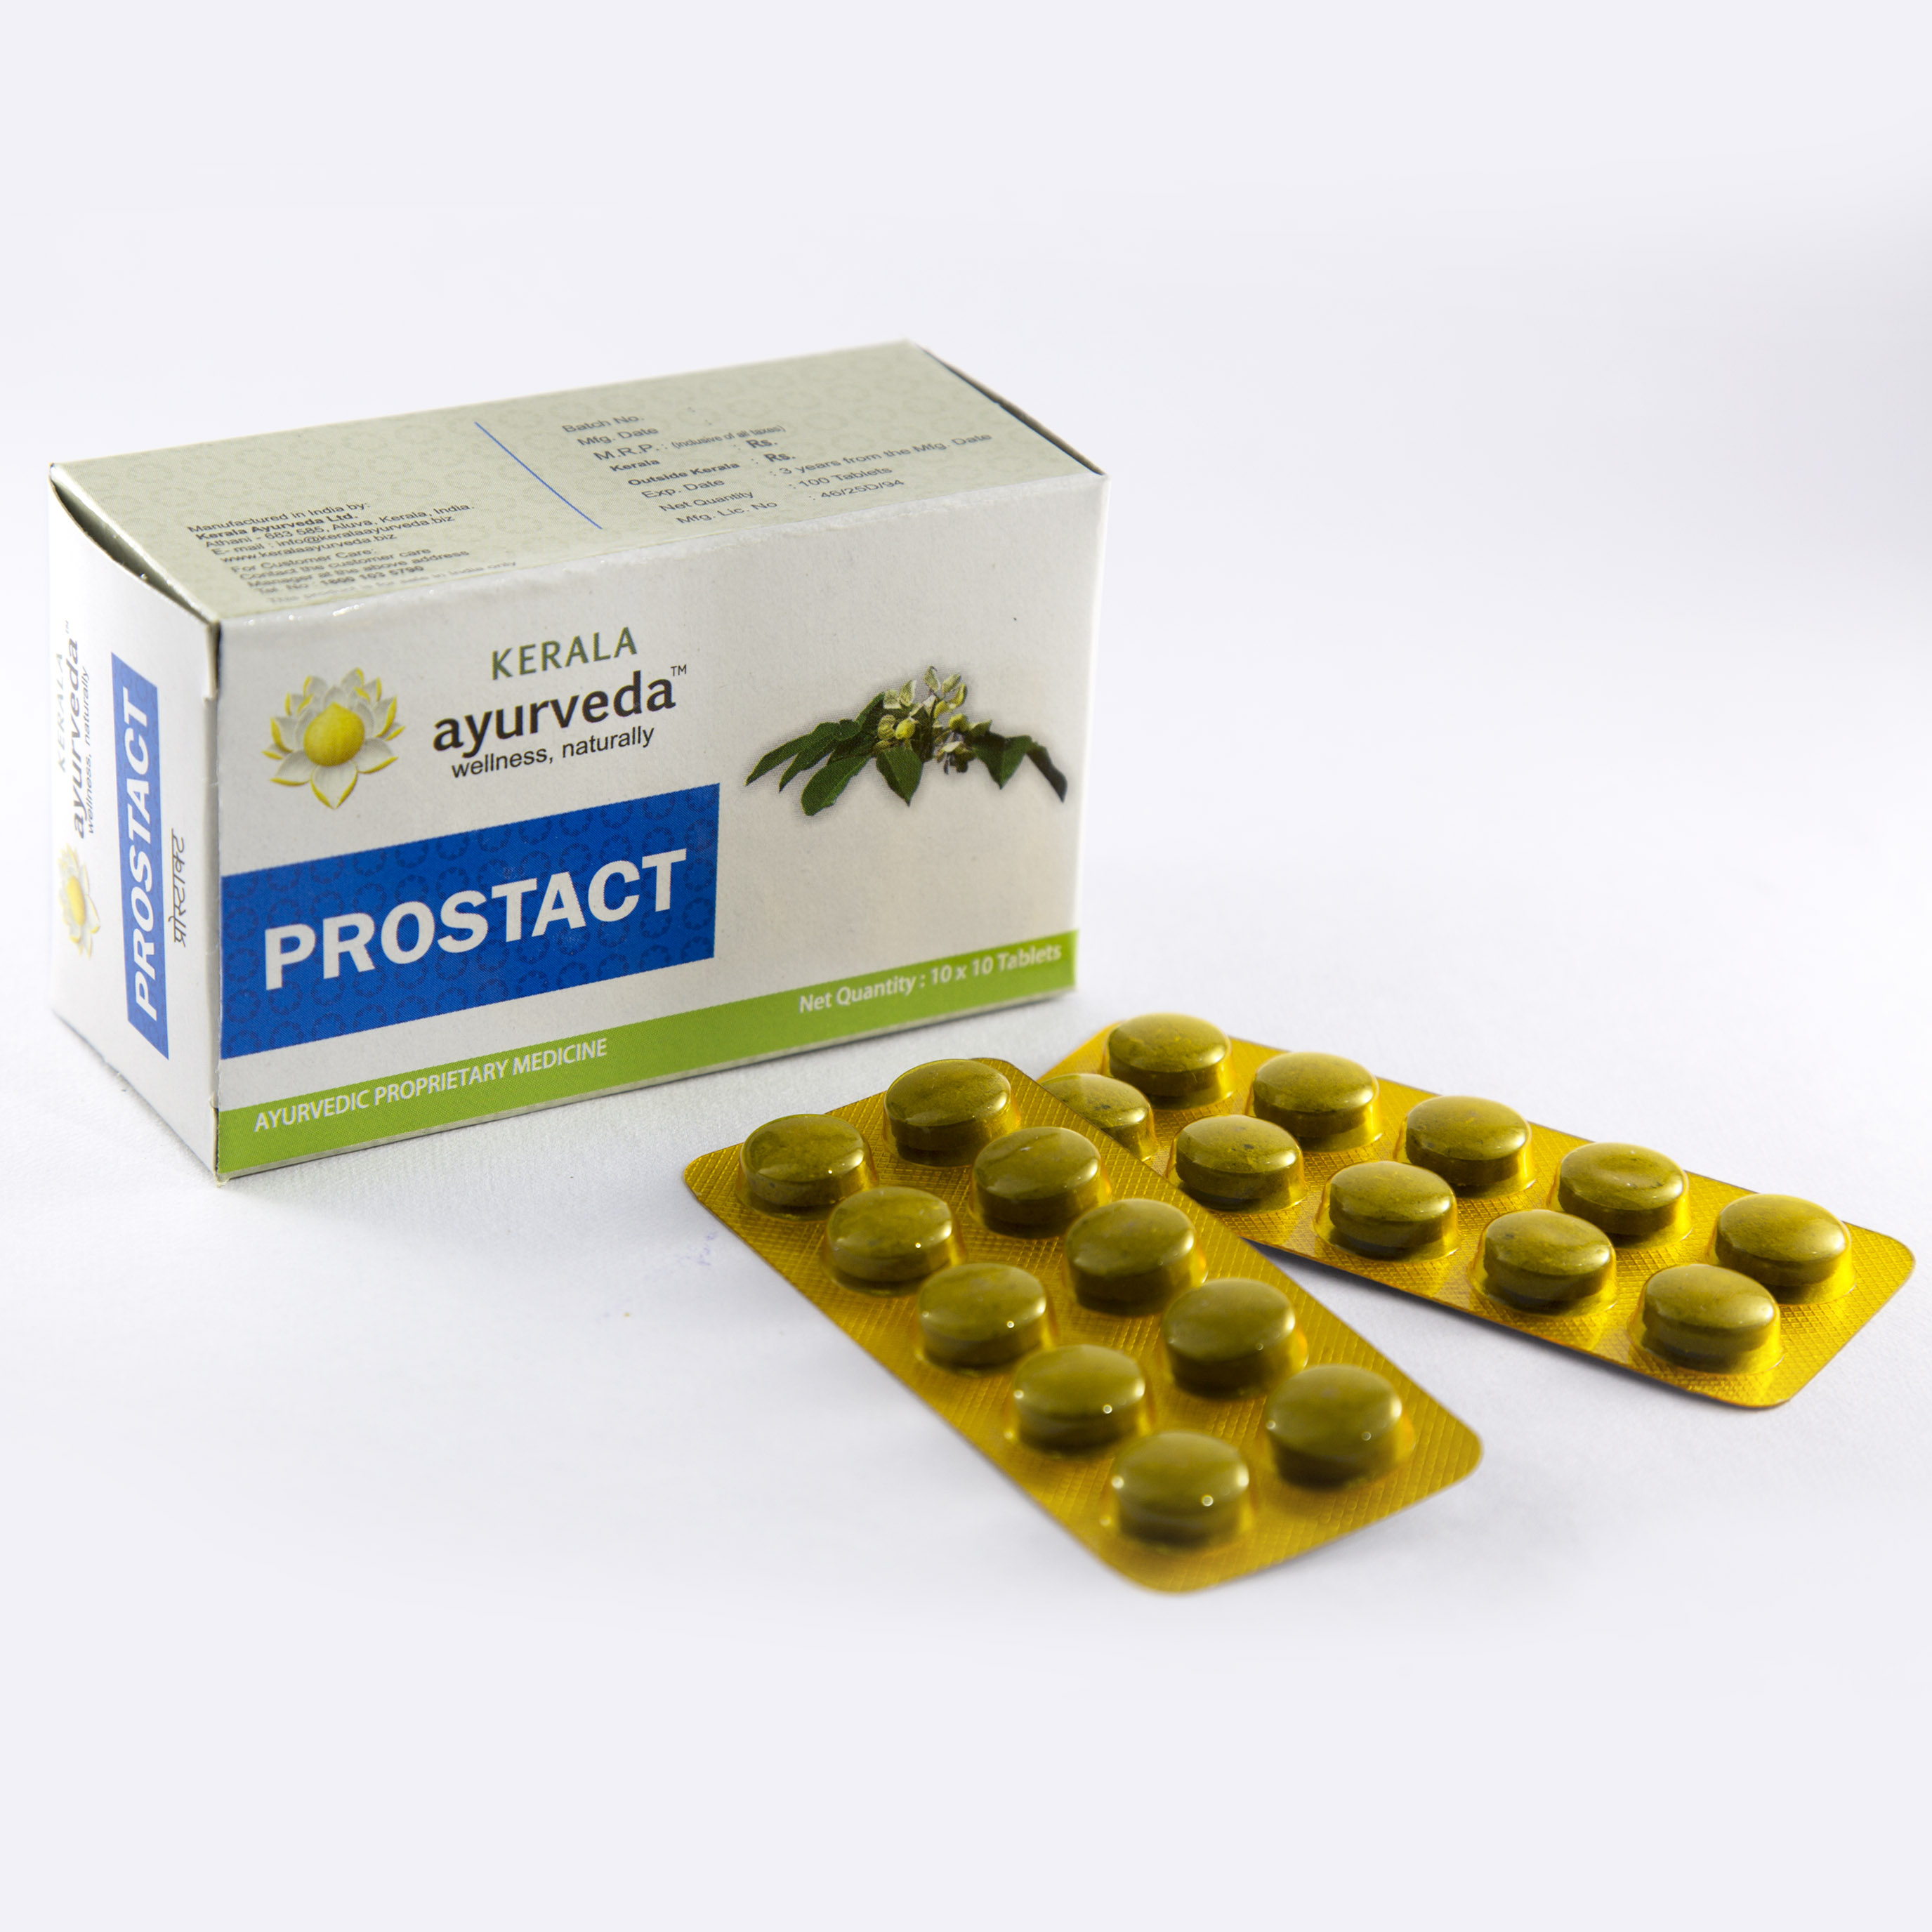 Buy Kerala Ayurveda Prostact Tablet at Best Price Online